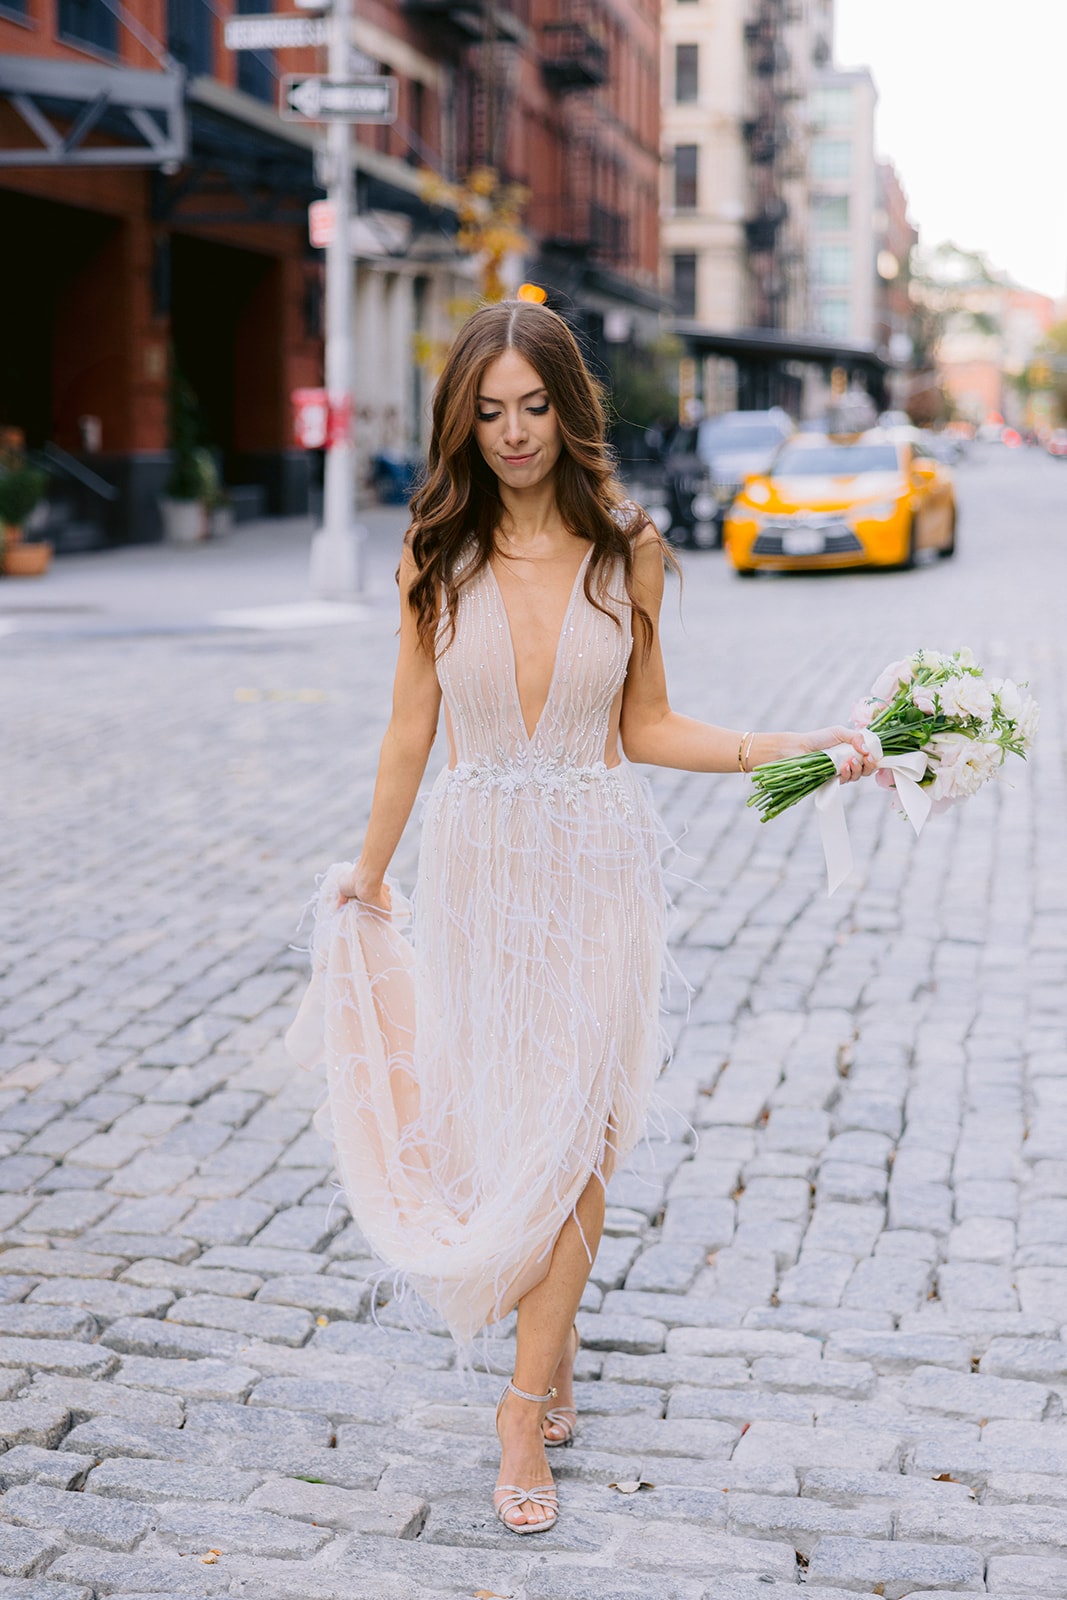 Eisen Stein Bride - Tribeca Rooftop Wedding - Larisa Shorina Photography - Elegant luxury weddings in New York, Italy, Destinations